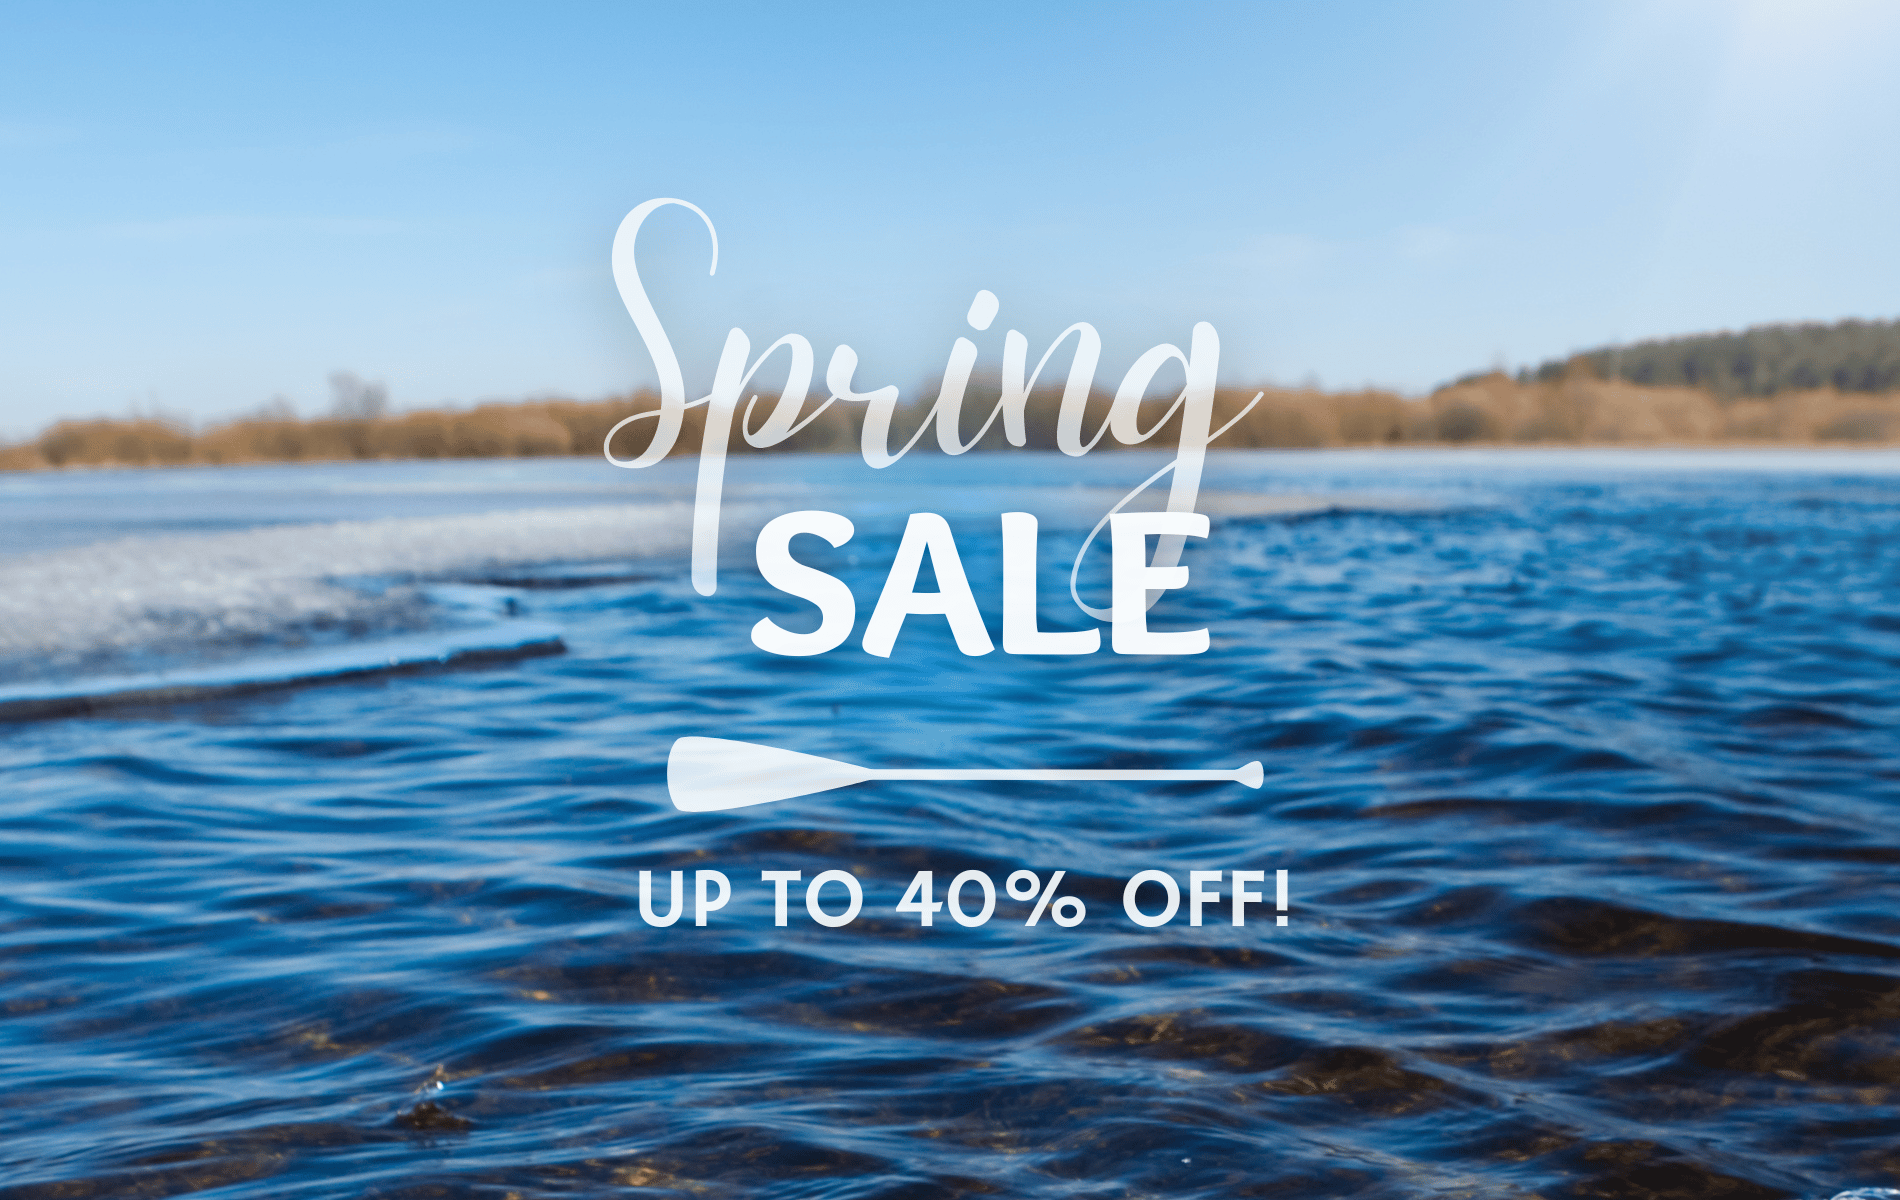 Paddle board lighting spring sale